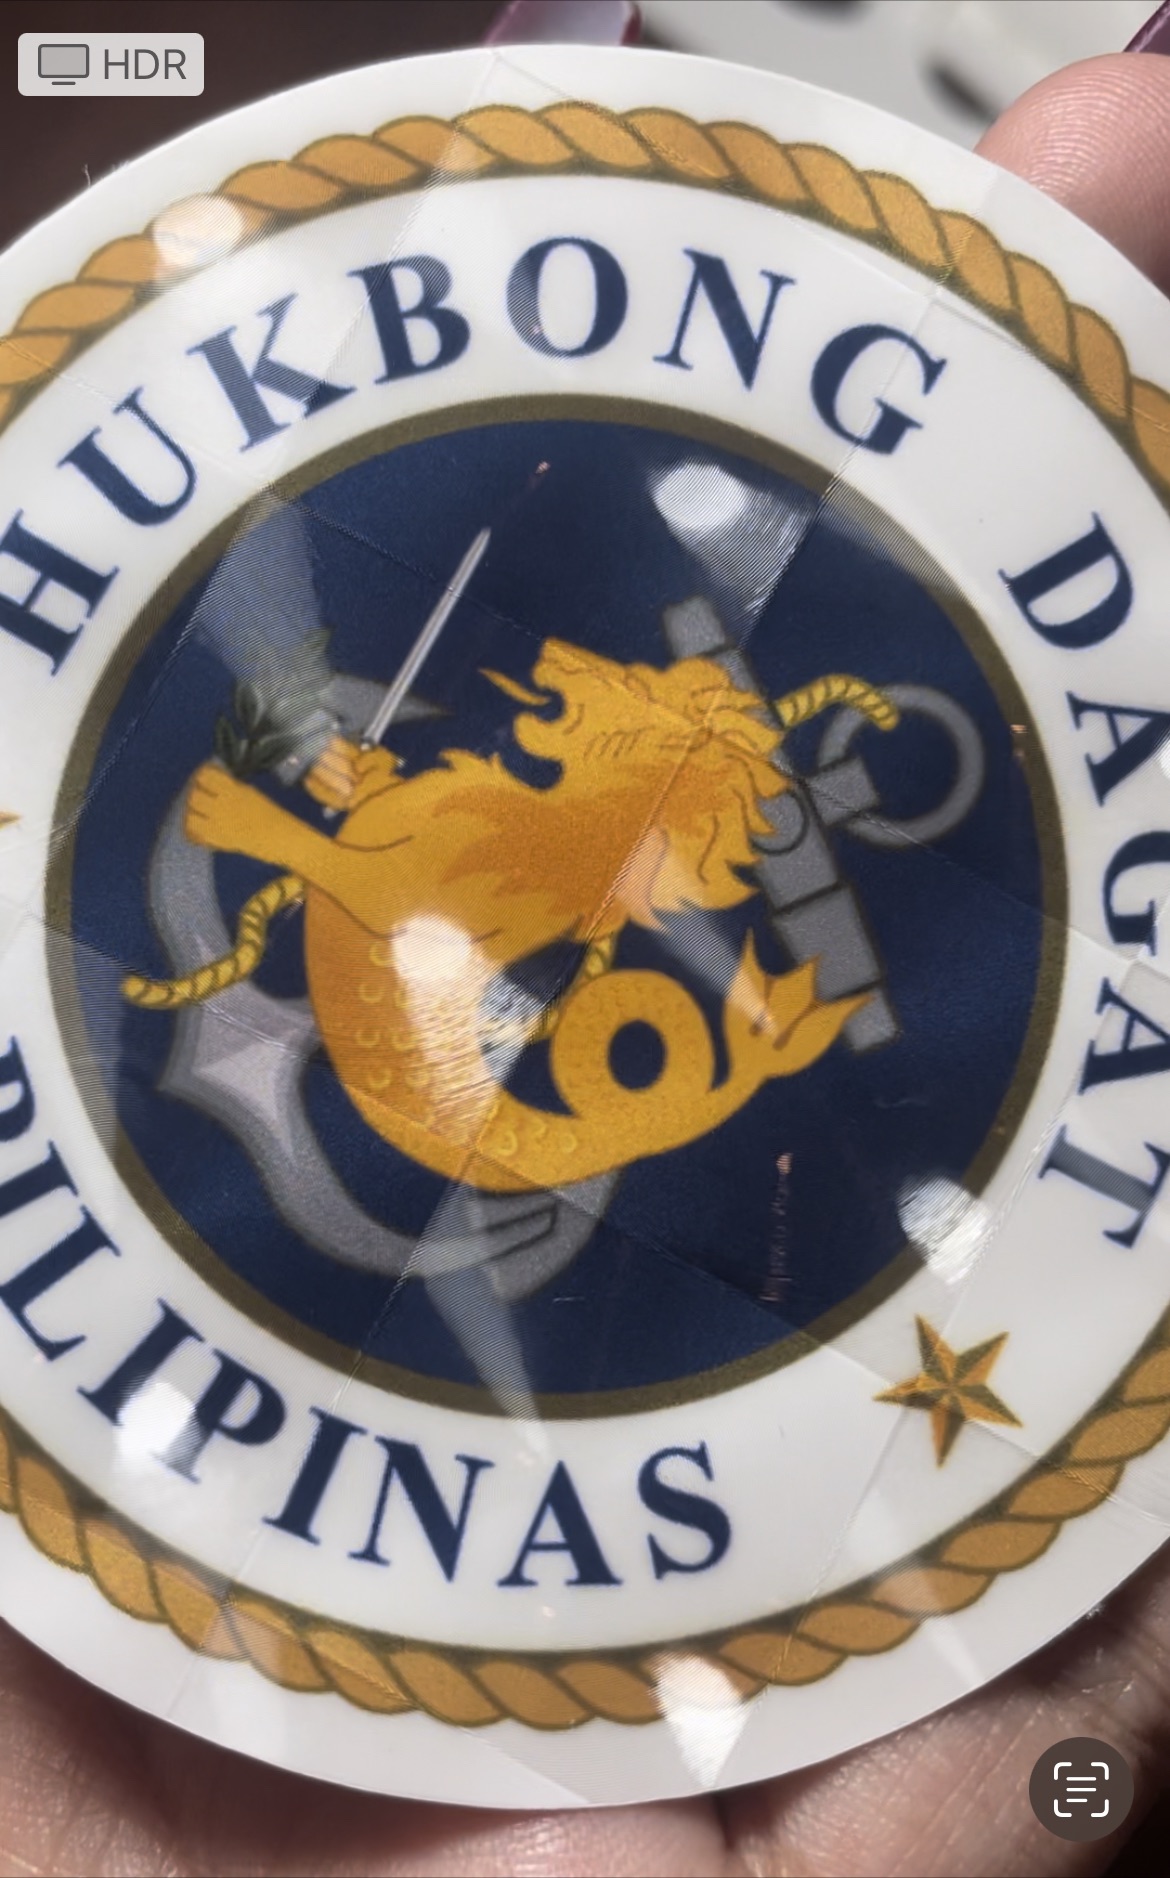 philippine navy logo